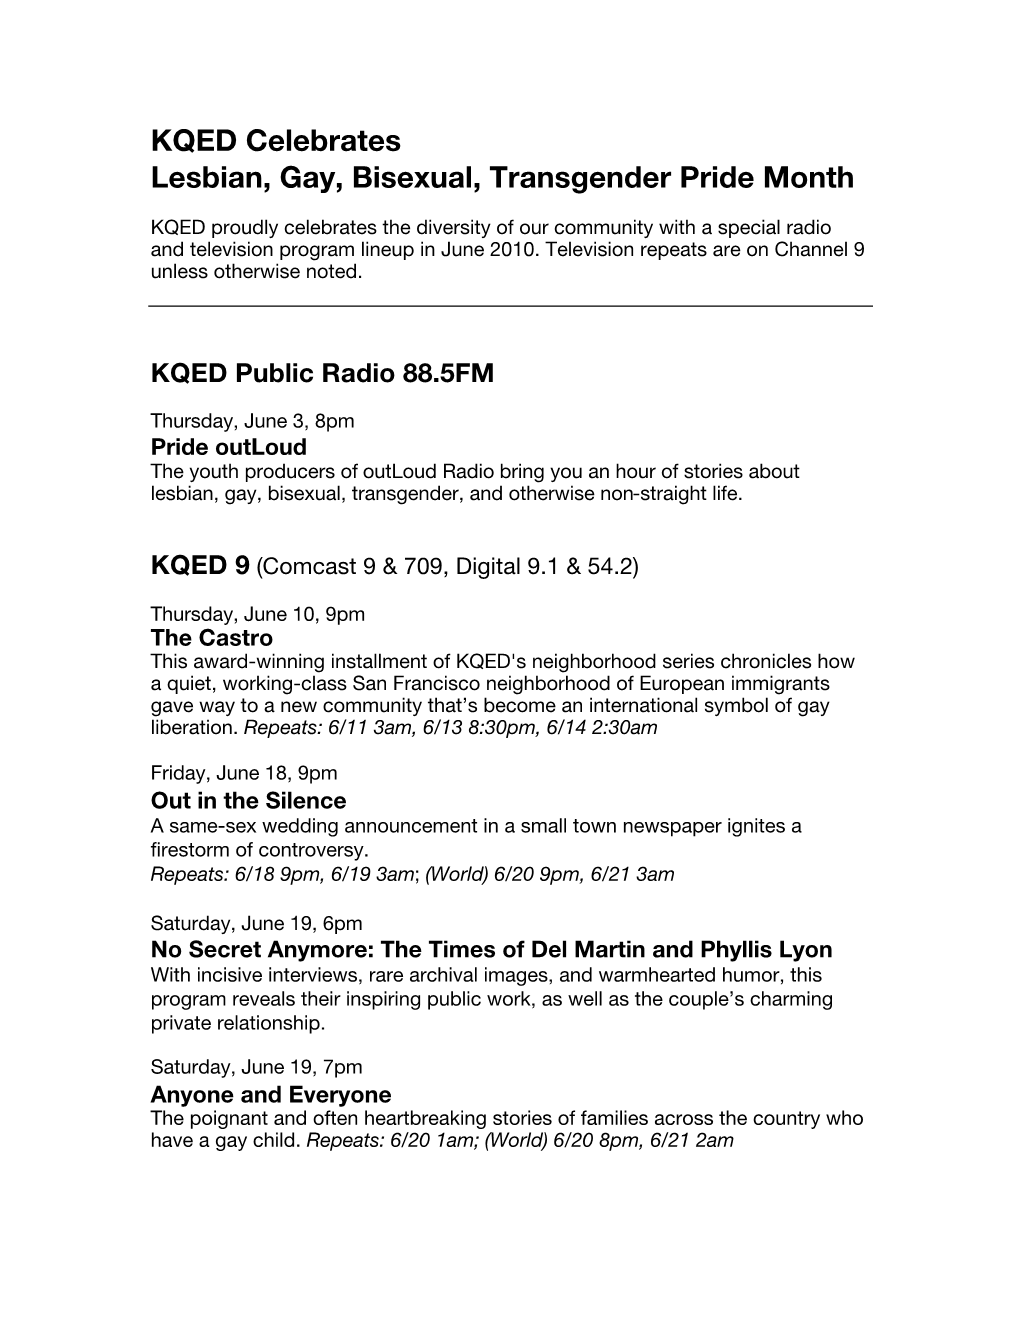 KQED Celebrates Lesbian, Gay, Bisexual, Transgender Pride Month